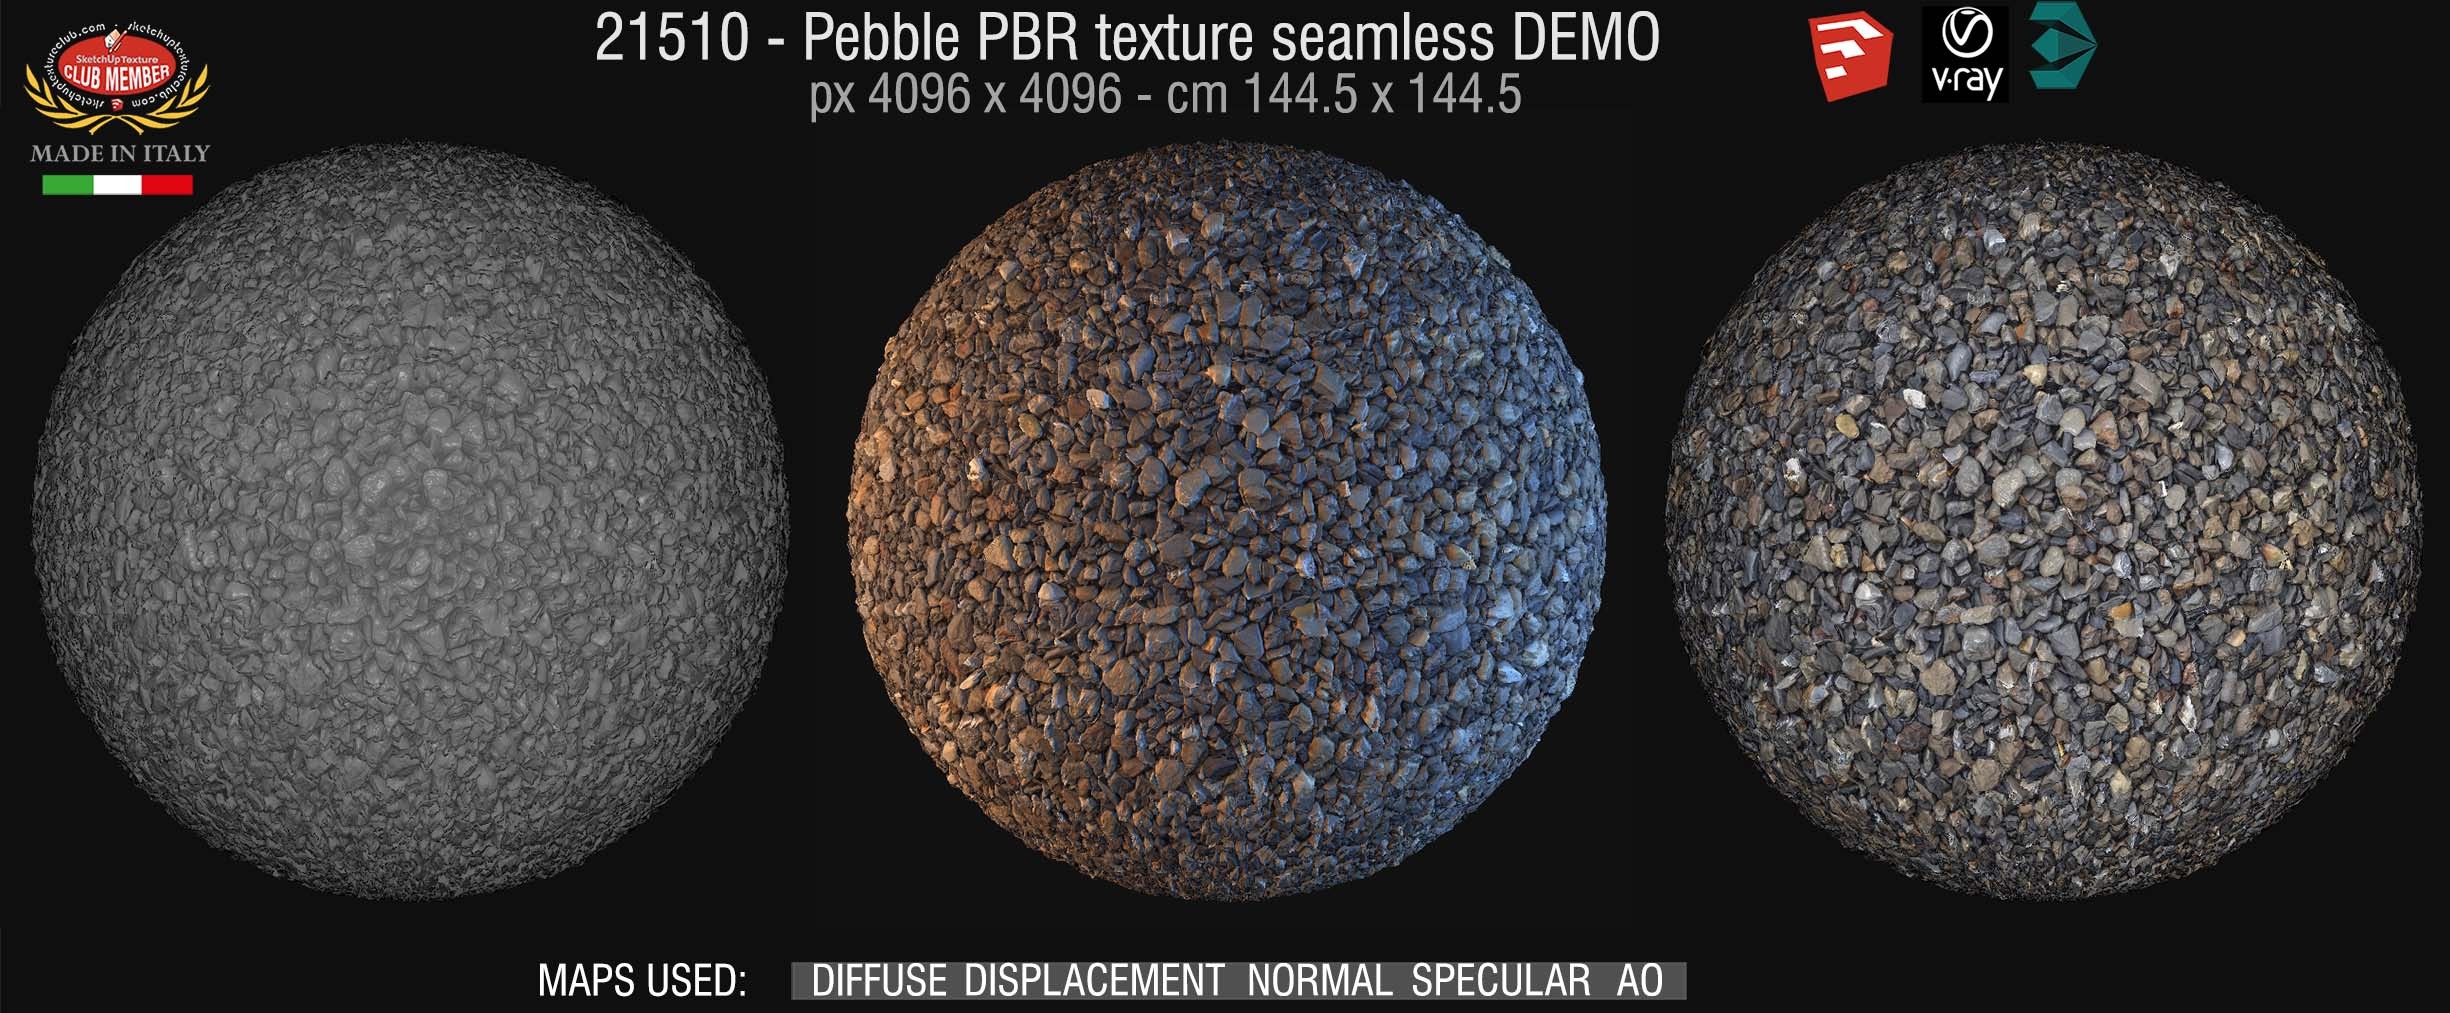 Pebbles PBR texture texture seamless DEMO